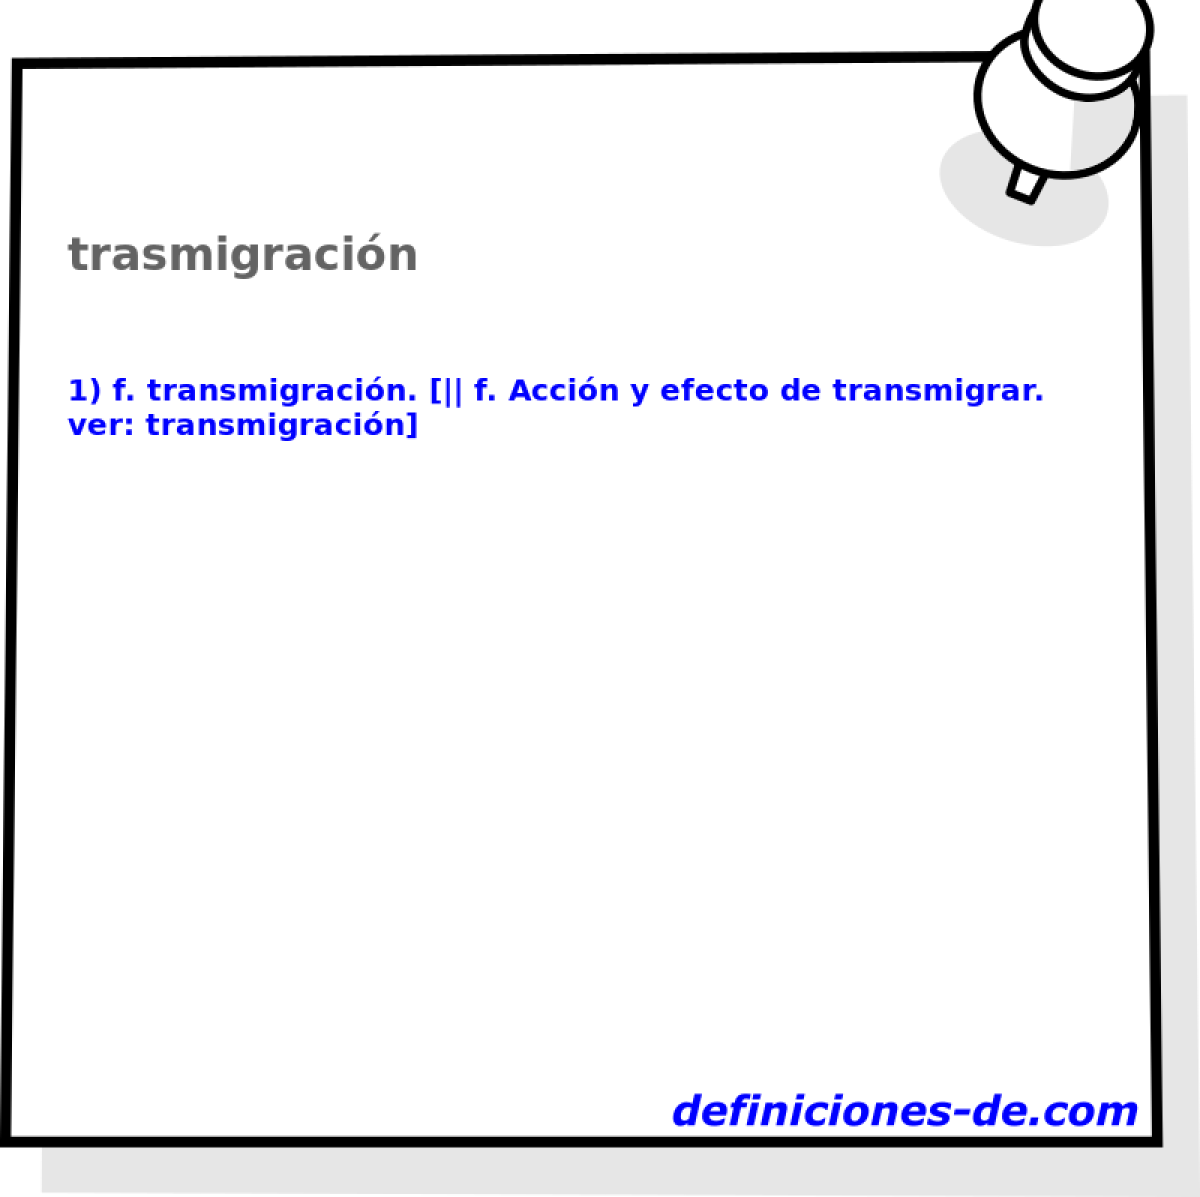 trasmigracin 